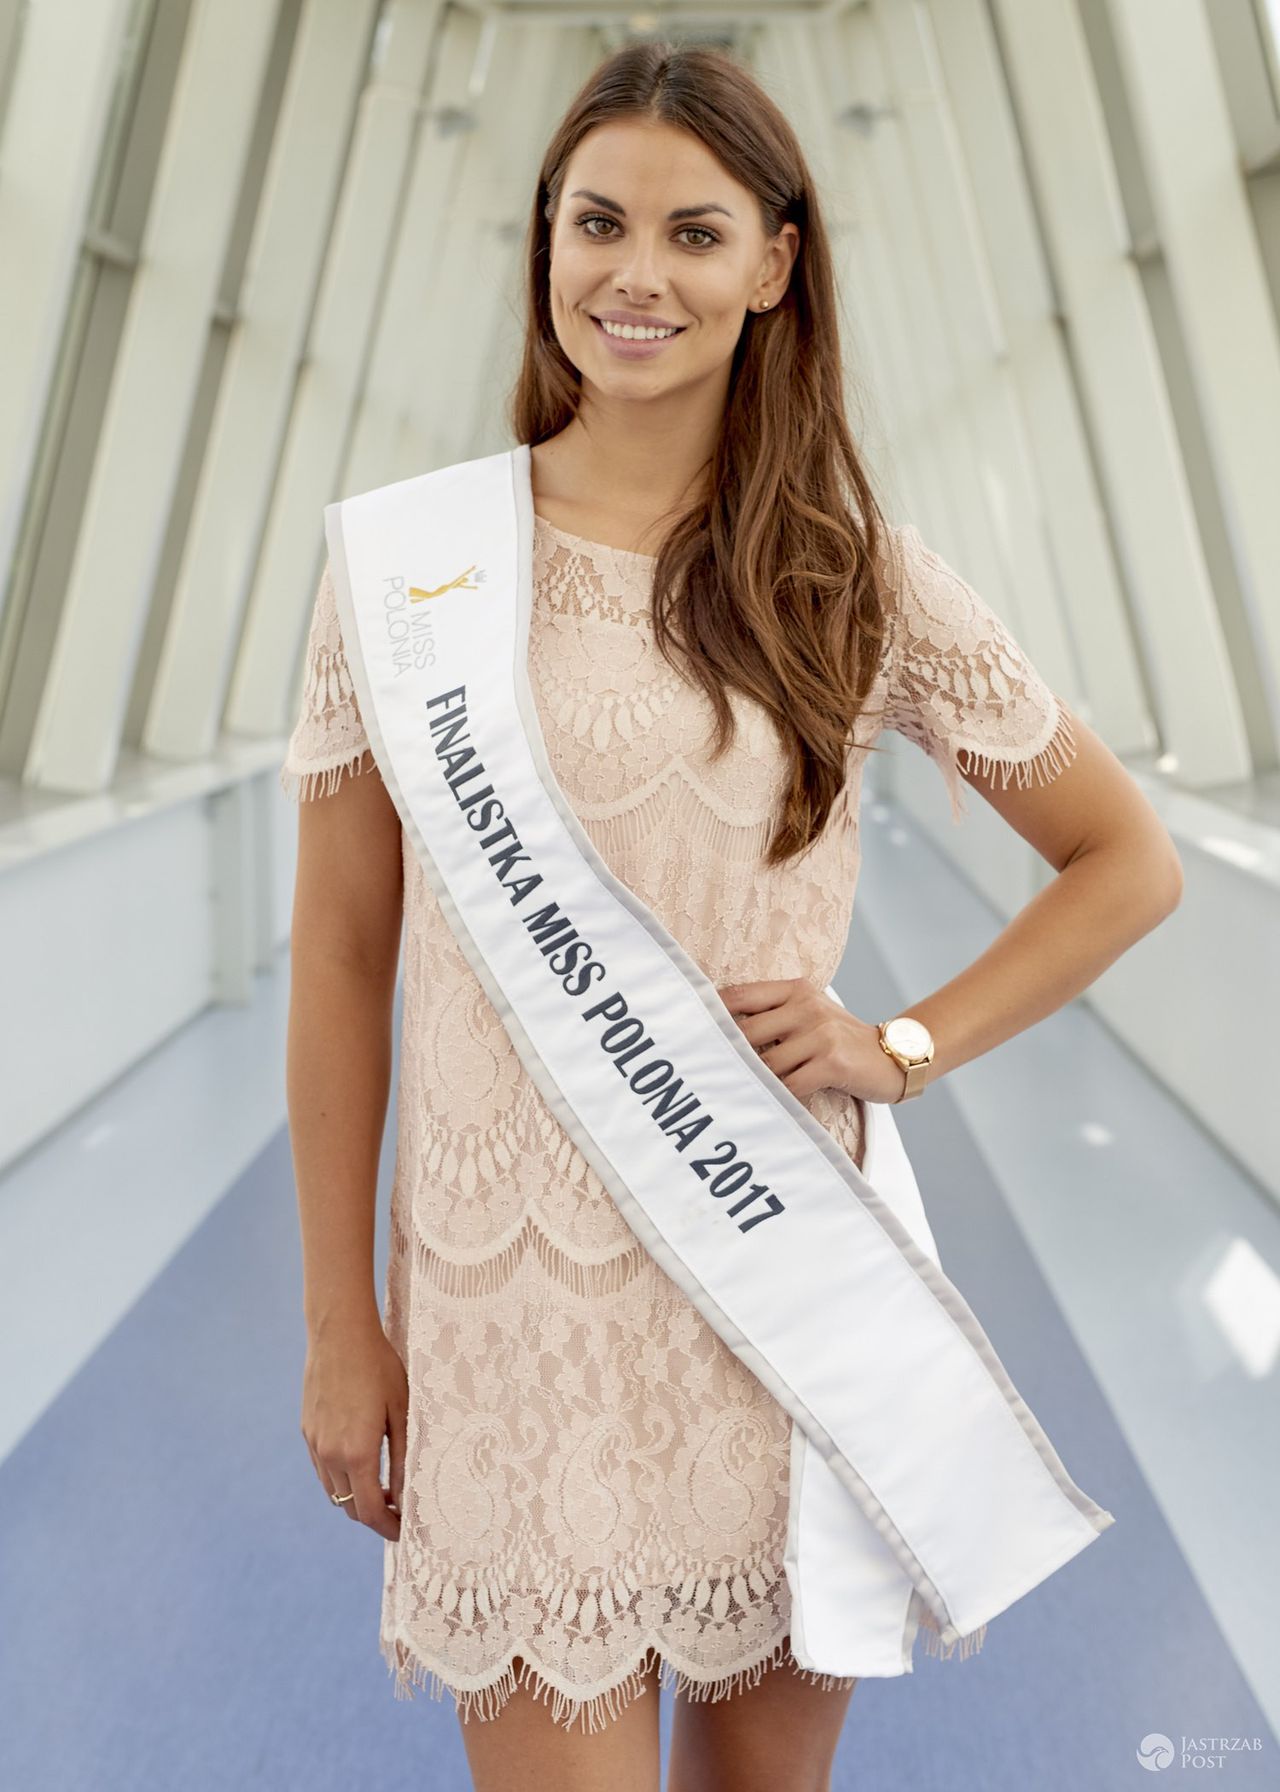 Agata Biernat - Miss Polonia 2017